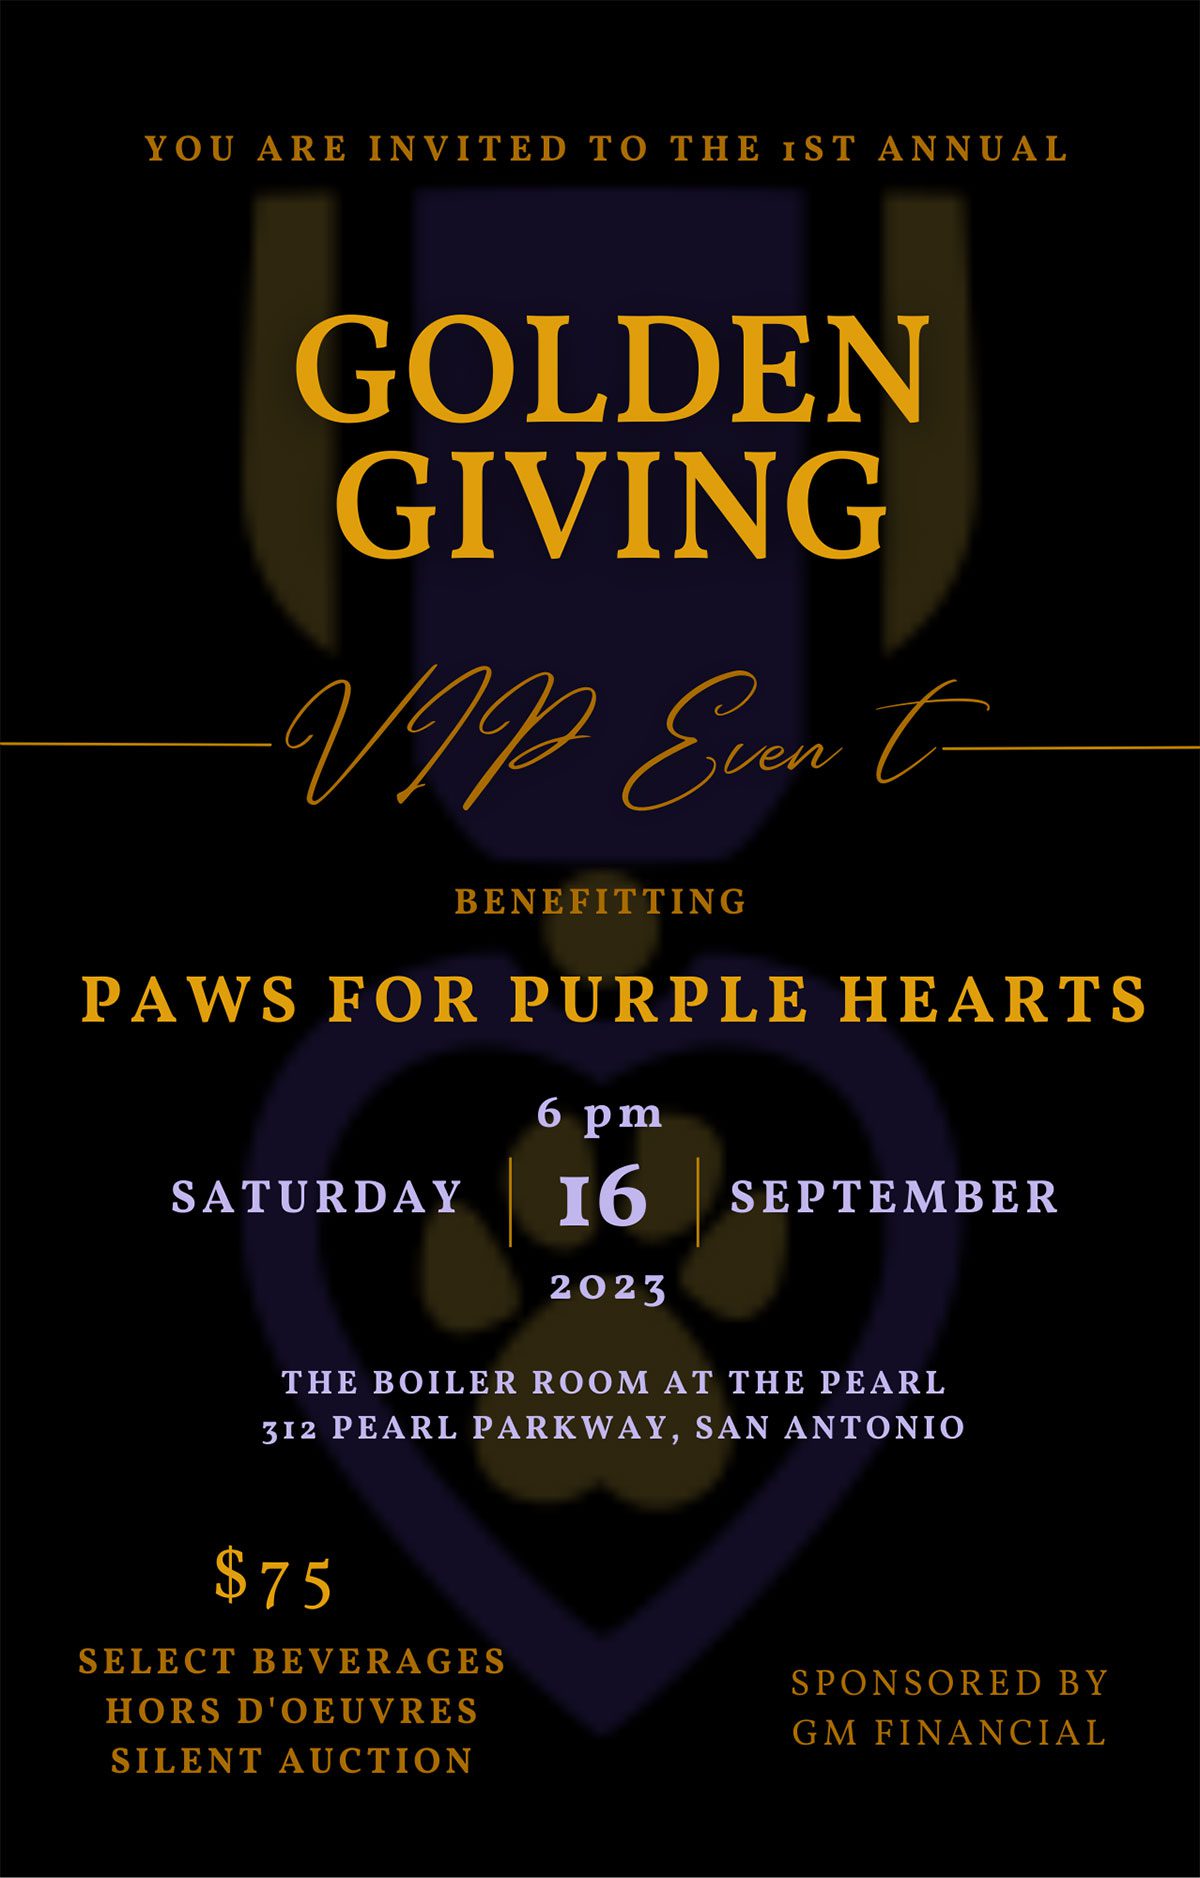 Golden Giving VIP Event